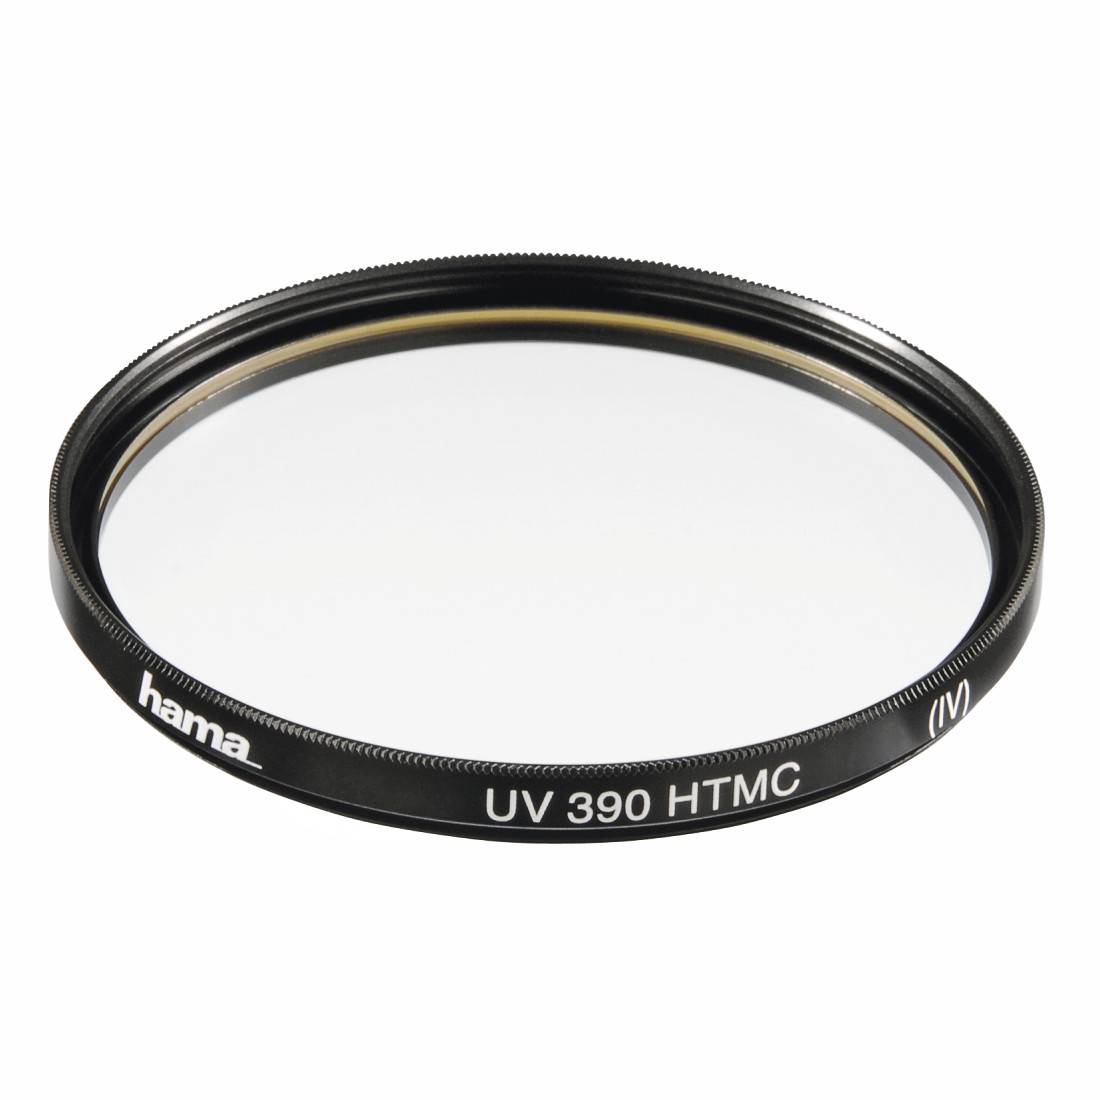 00070655 Hama UV Filter 390, HTMC multi-coated, 55.0 mm | hama.com